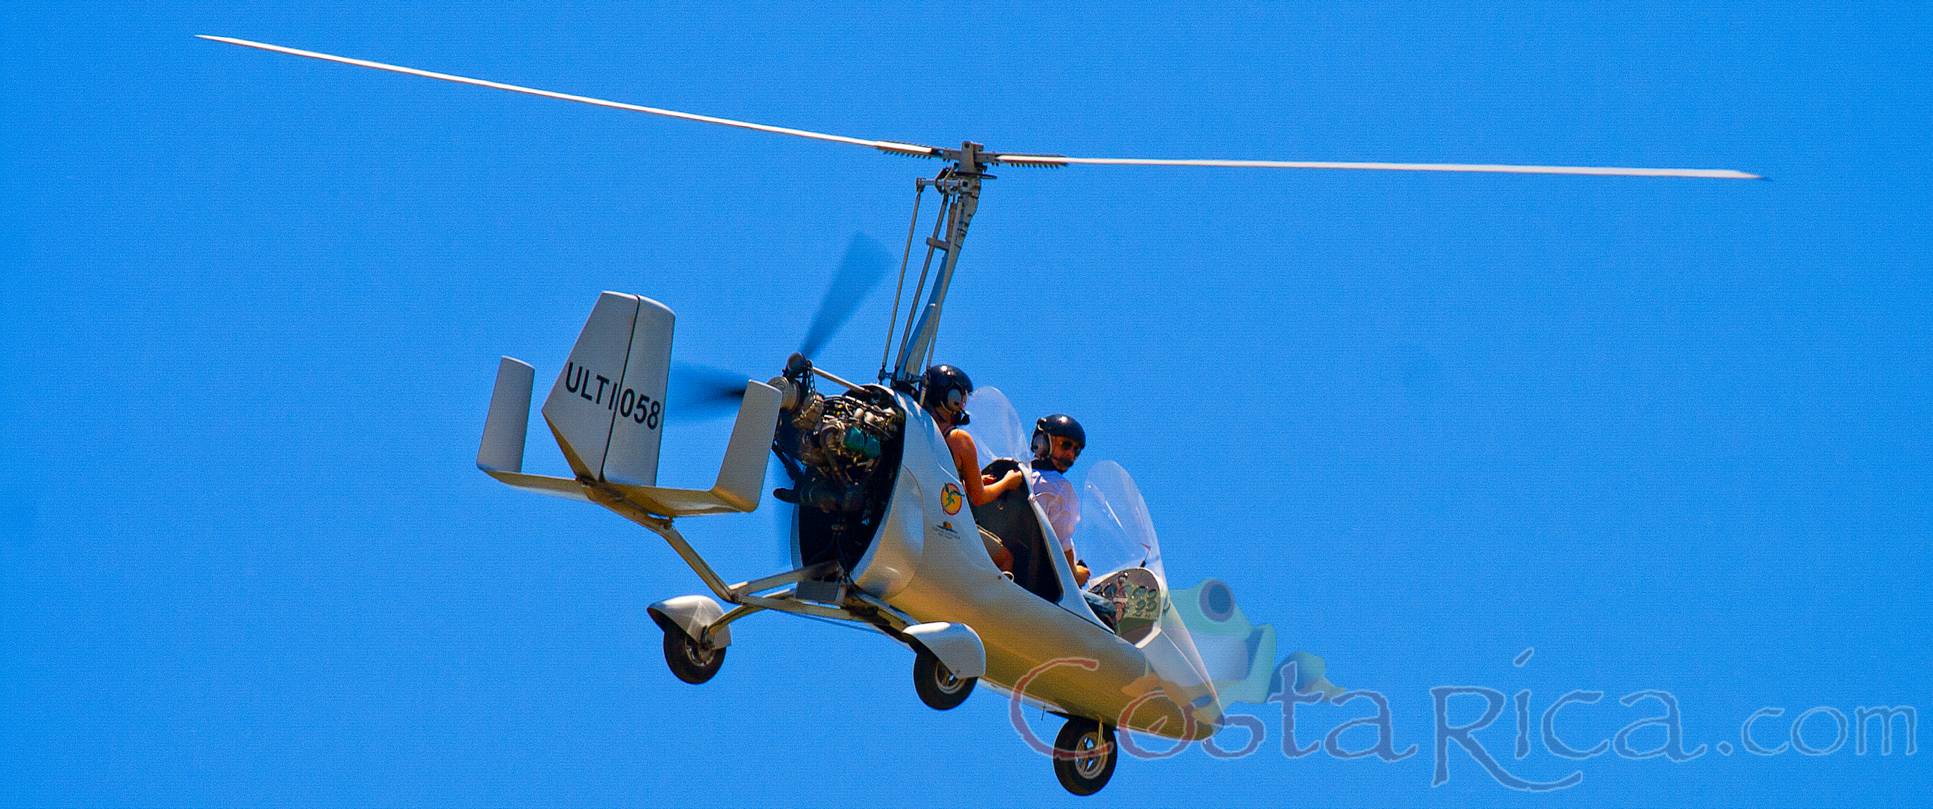 ultralight flying crocodile aircraft
 - Costa Rica